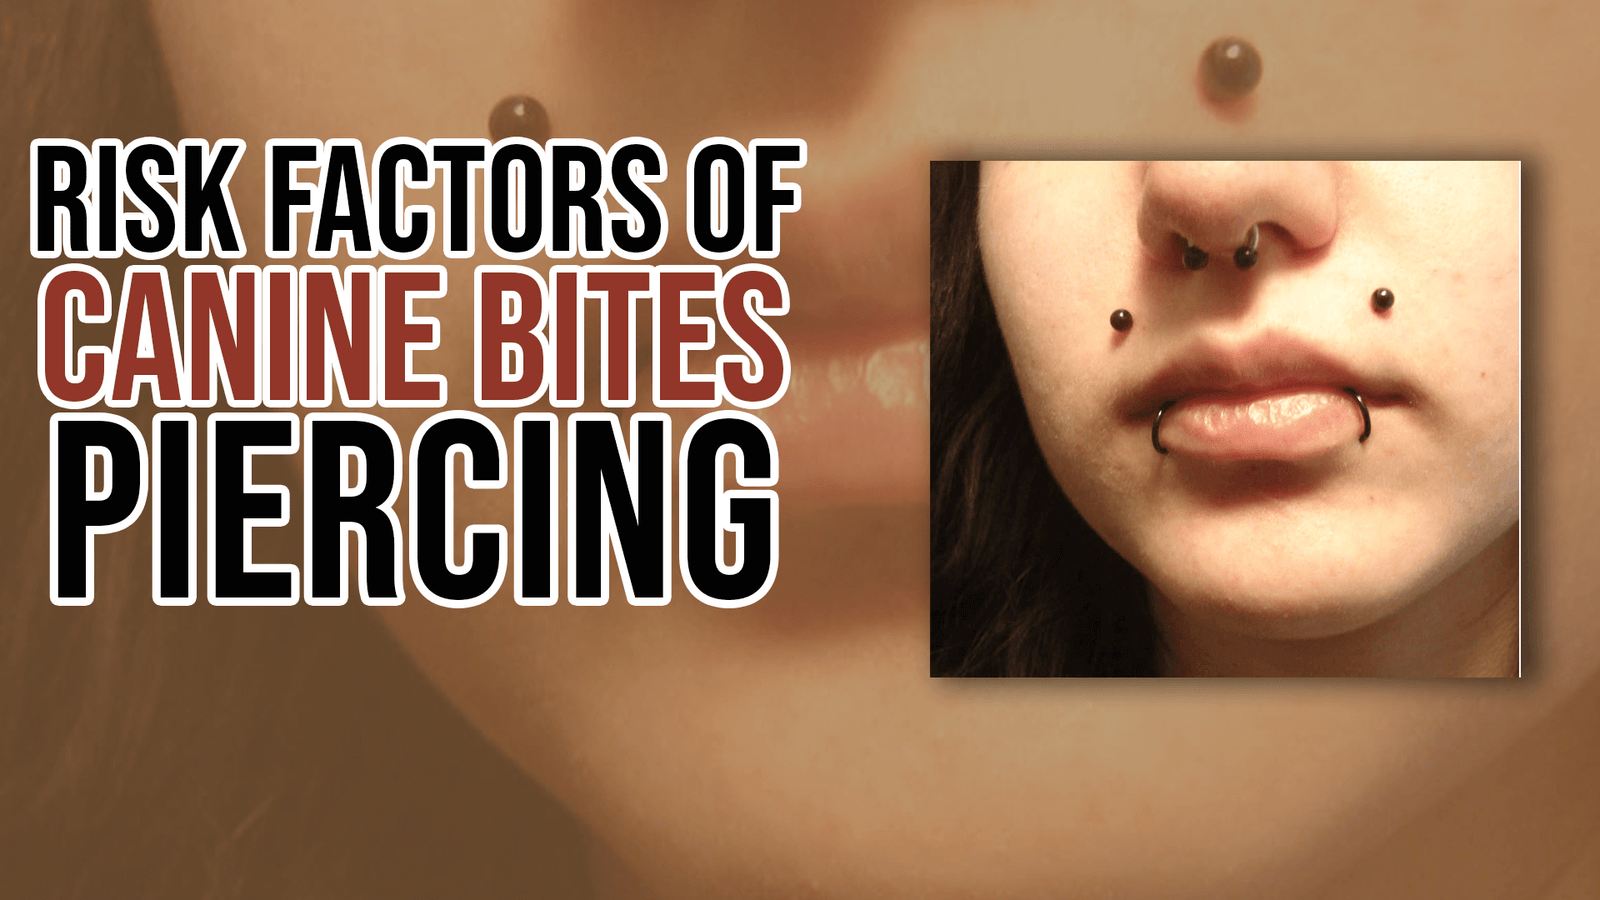 Risk Factors of Canine Bites Piercing